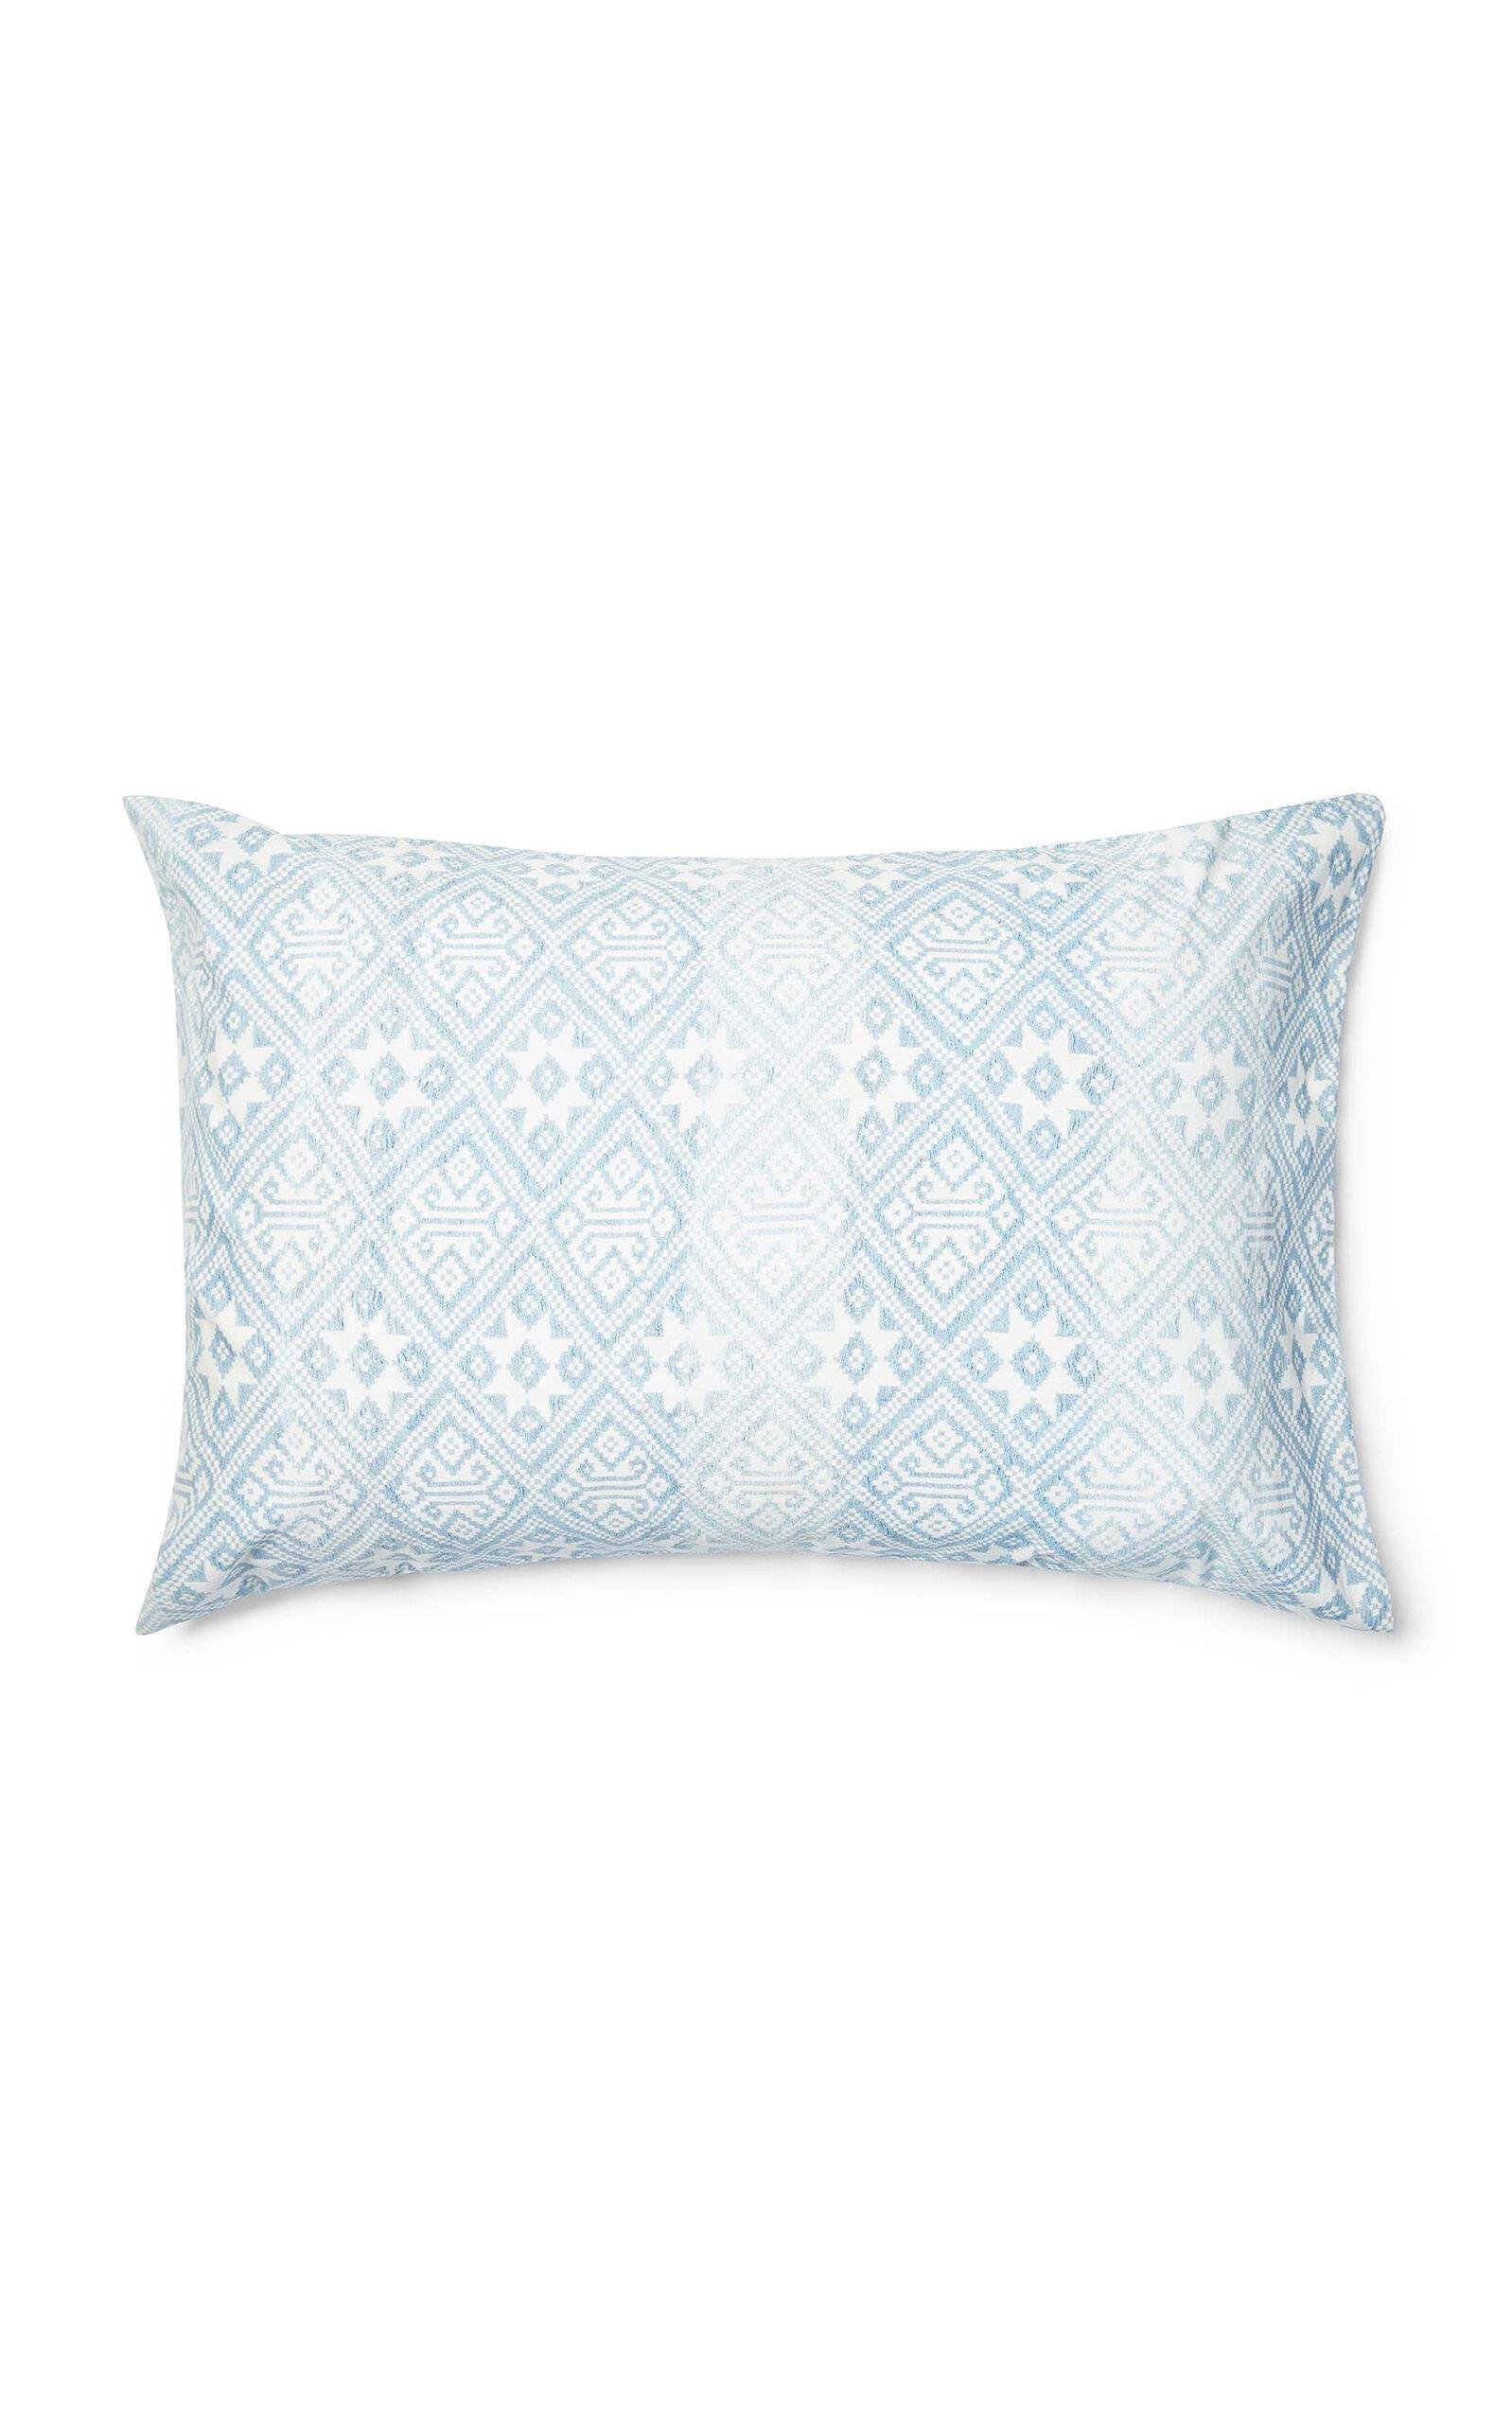 St. Frank - Muong Light Star Cotton Percale Pillowcase Set - Light Blue - Moda Operandi by ST. FRANK